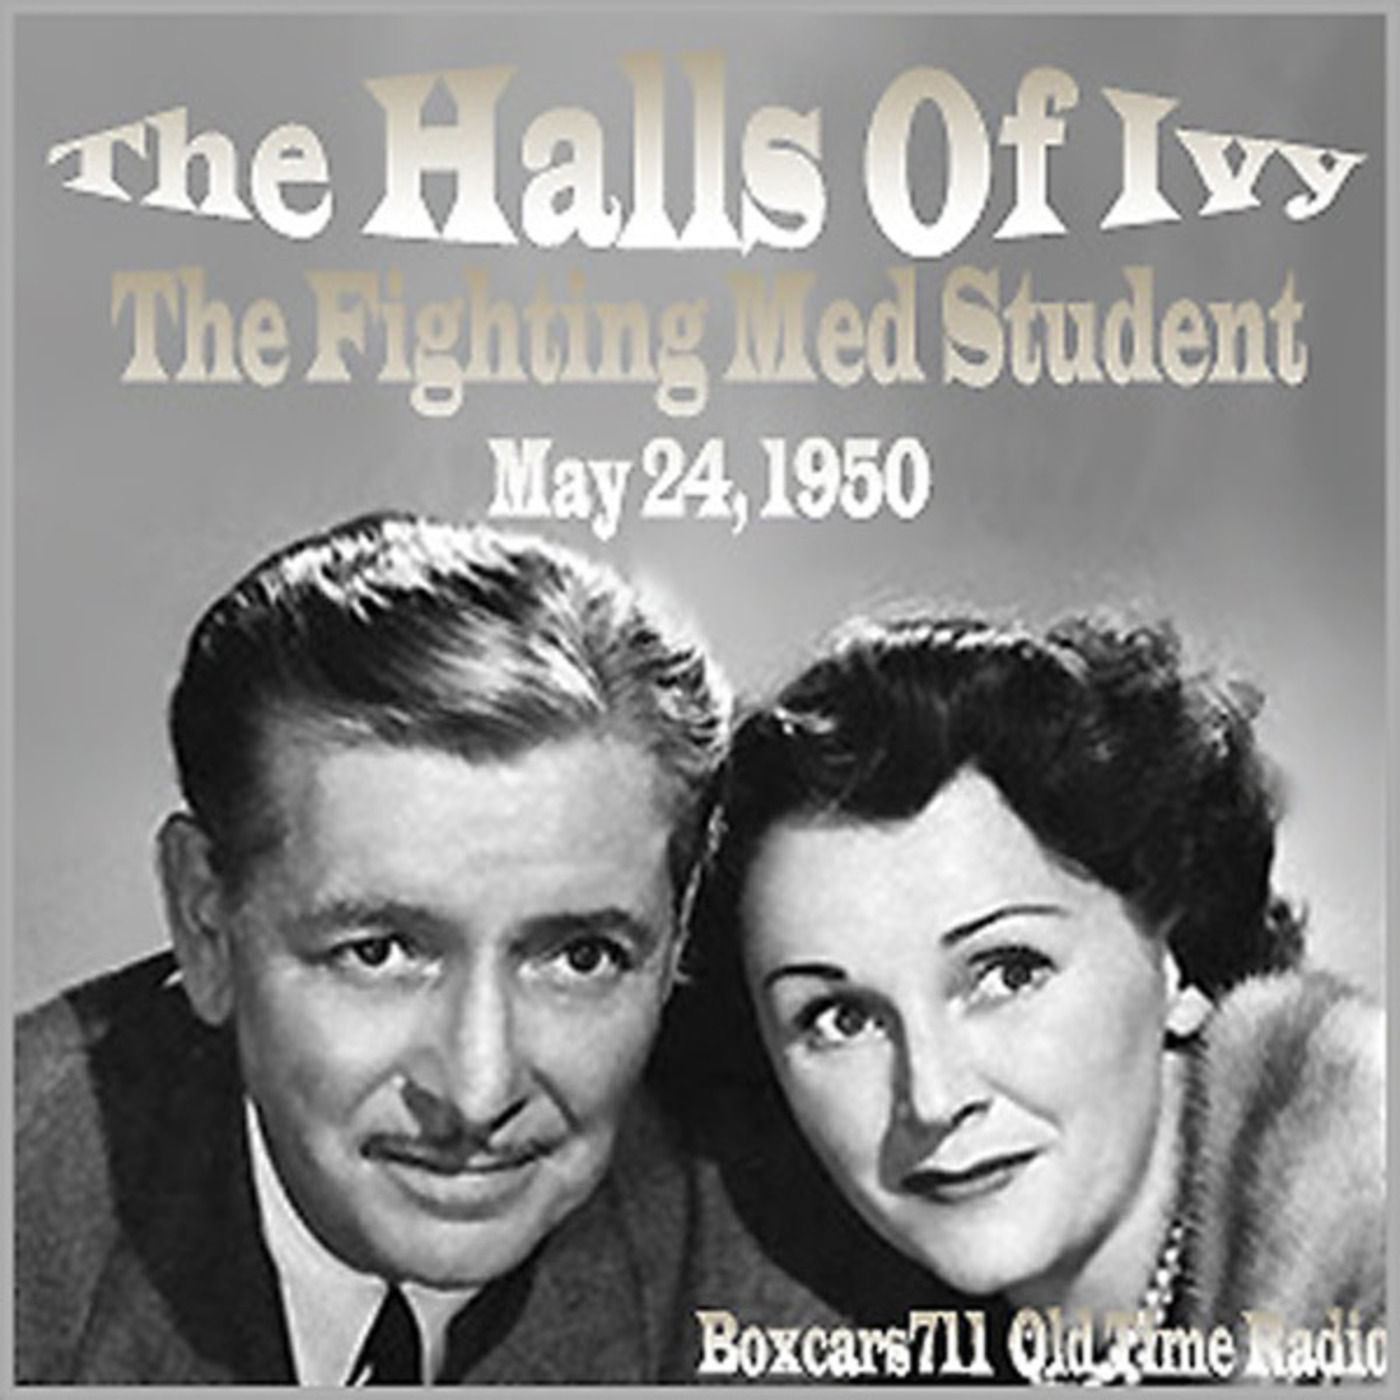 Episode 9519: The Halls Of Ivy - 